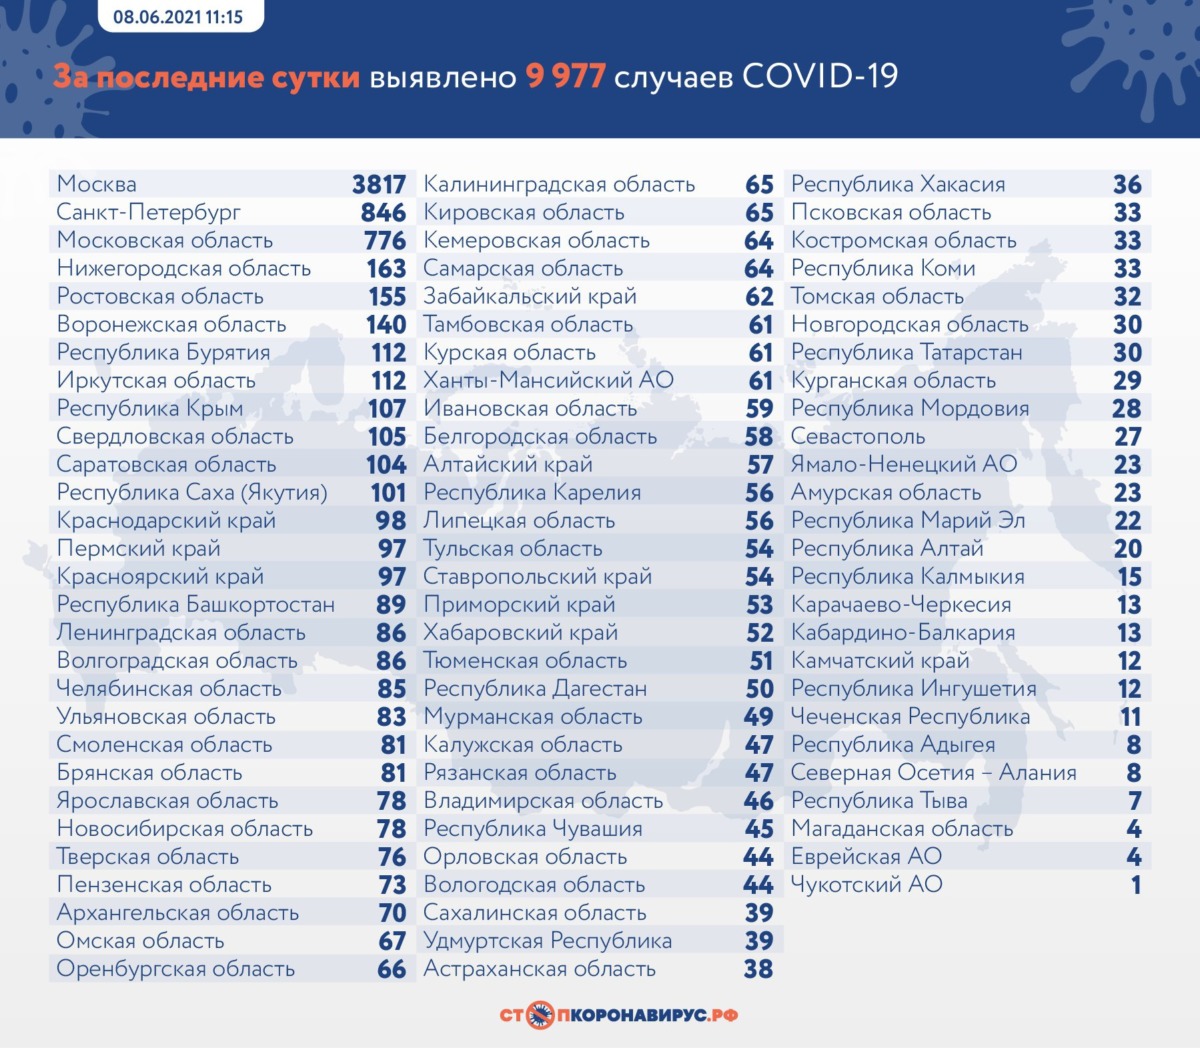 Оперативная статистика коронавируса в России на 8 июня